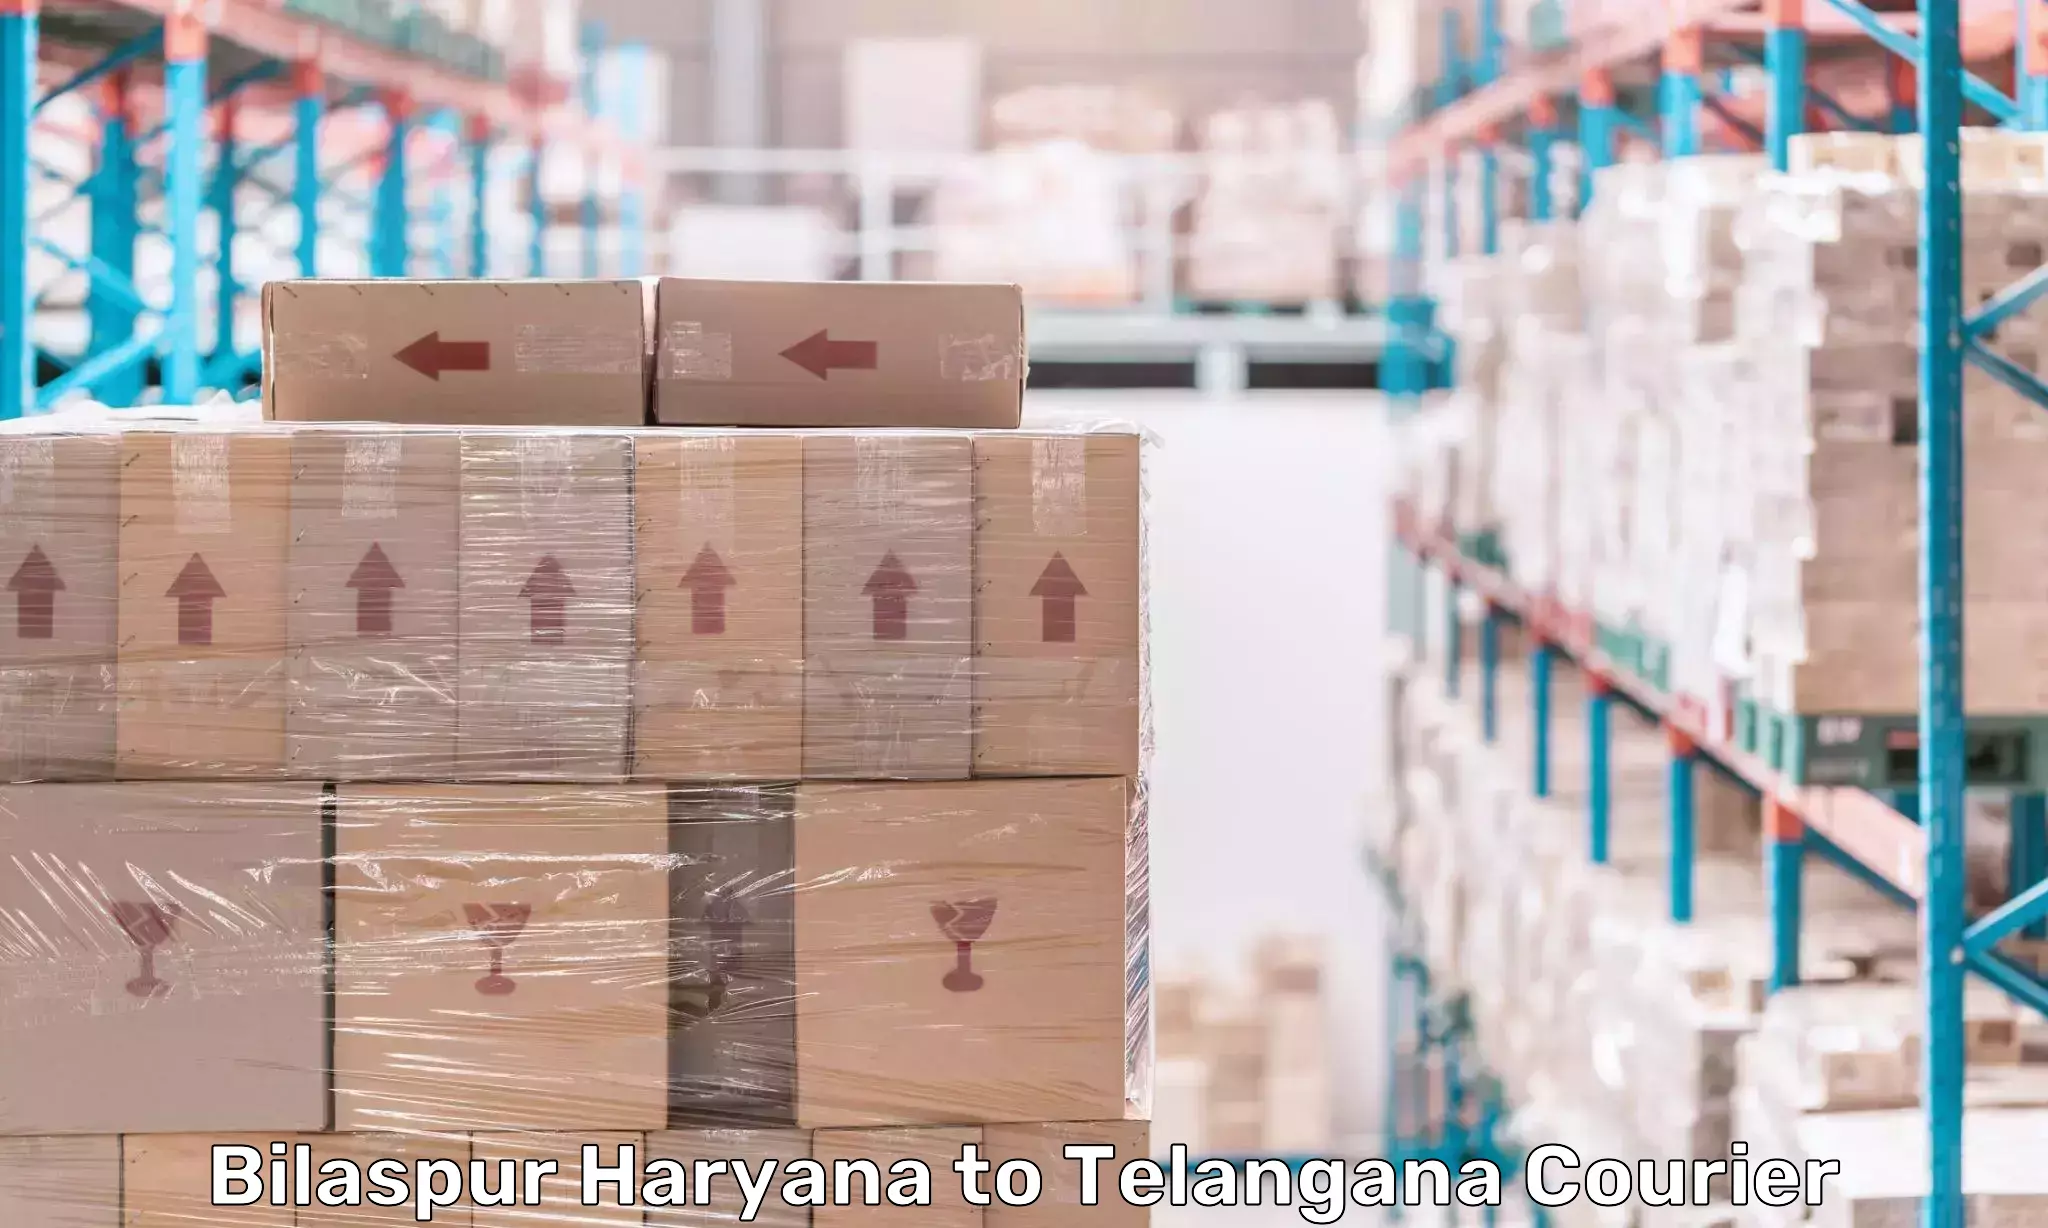 Customer-centric shipping Bilaspur Haryana to Secunderabad